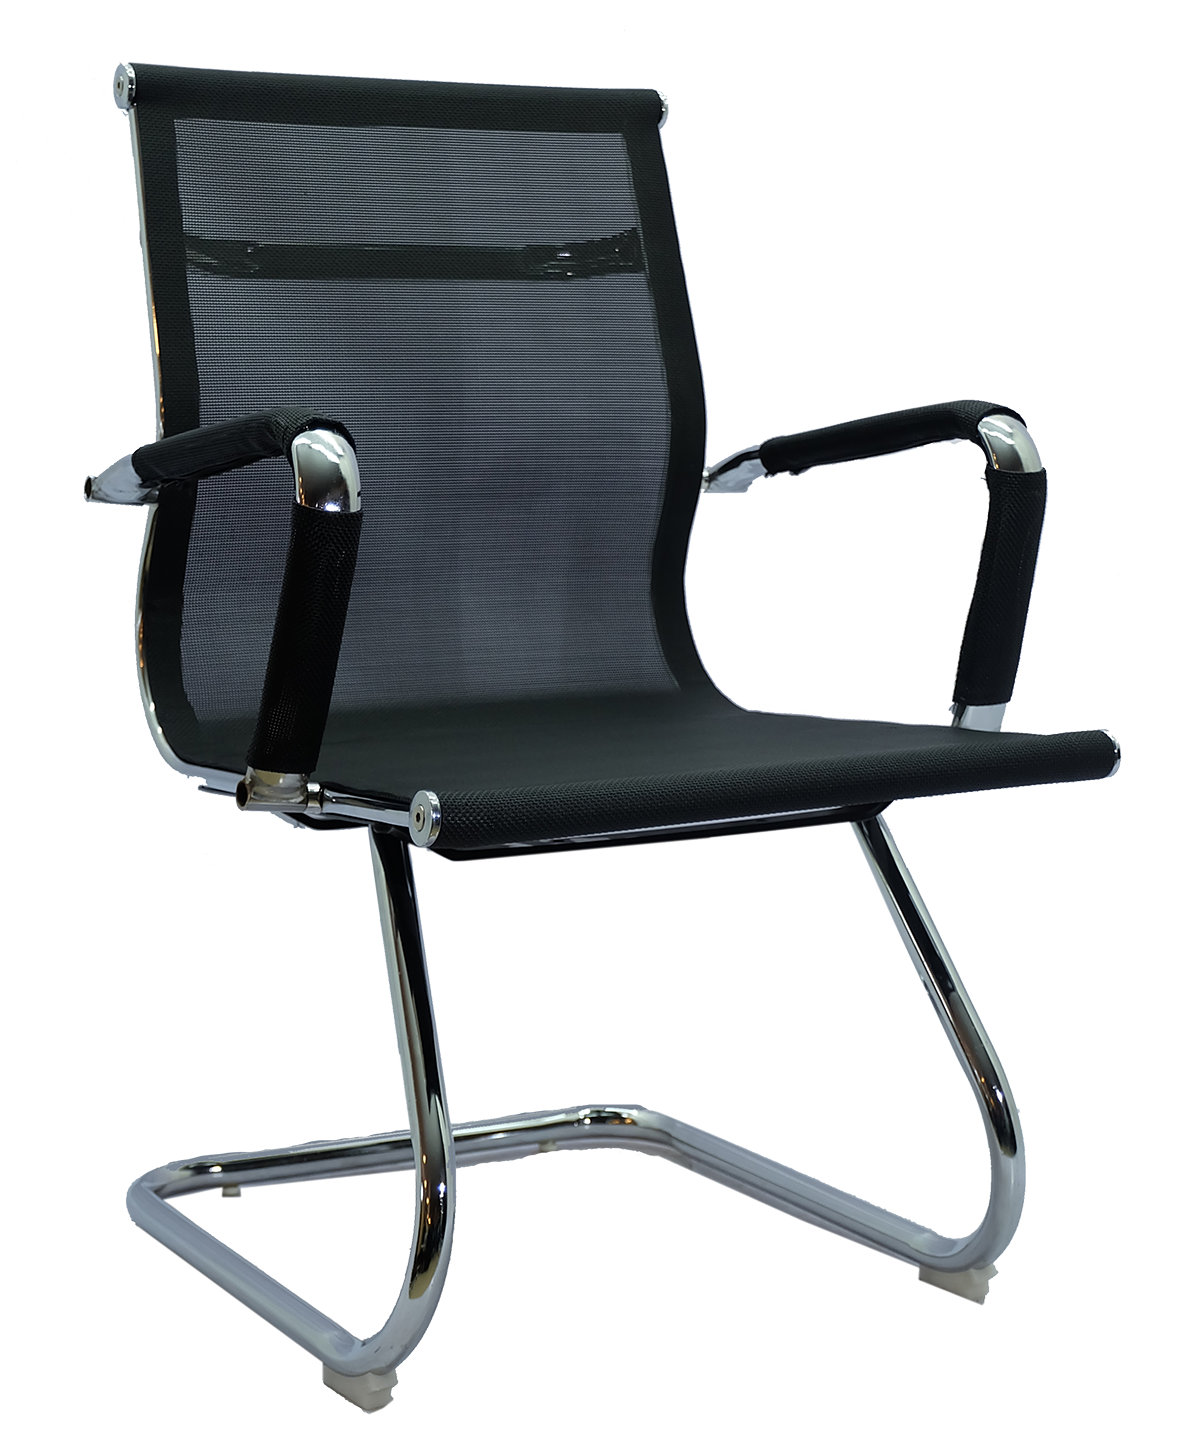 Super Chair เก้าอี้สำนักงาน ห้องประชุม รุ่น ERGO-JW527 V